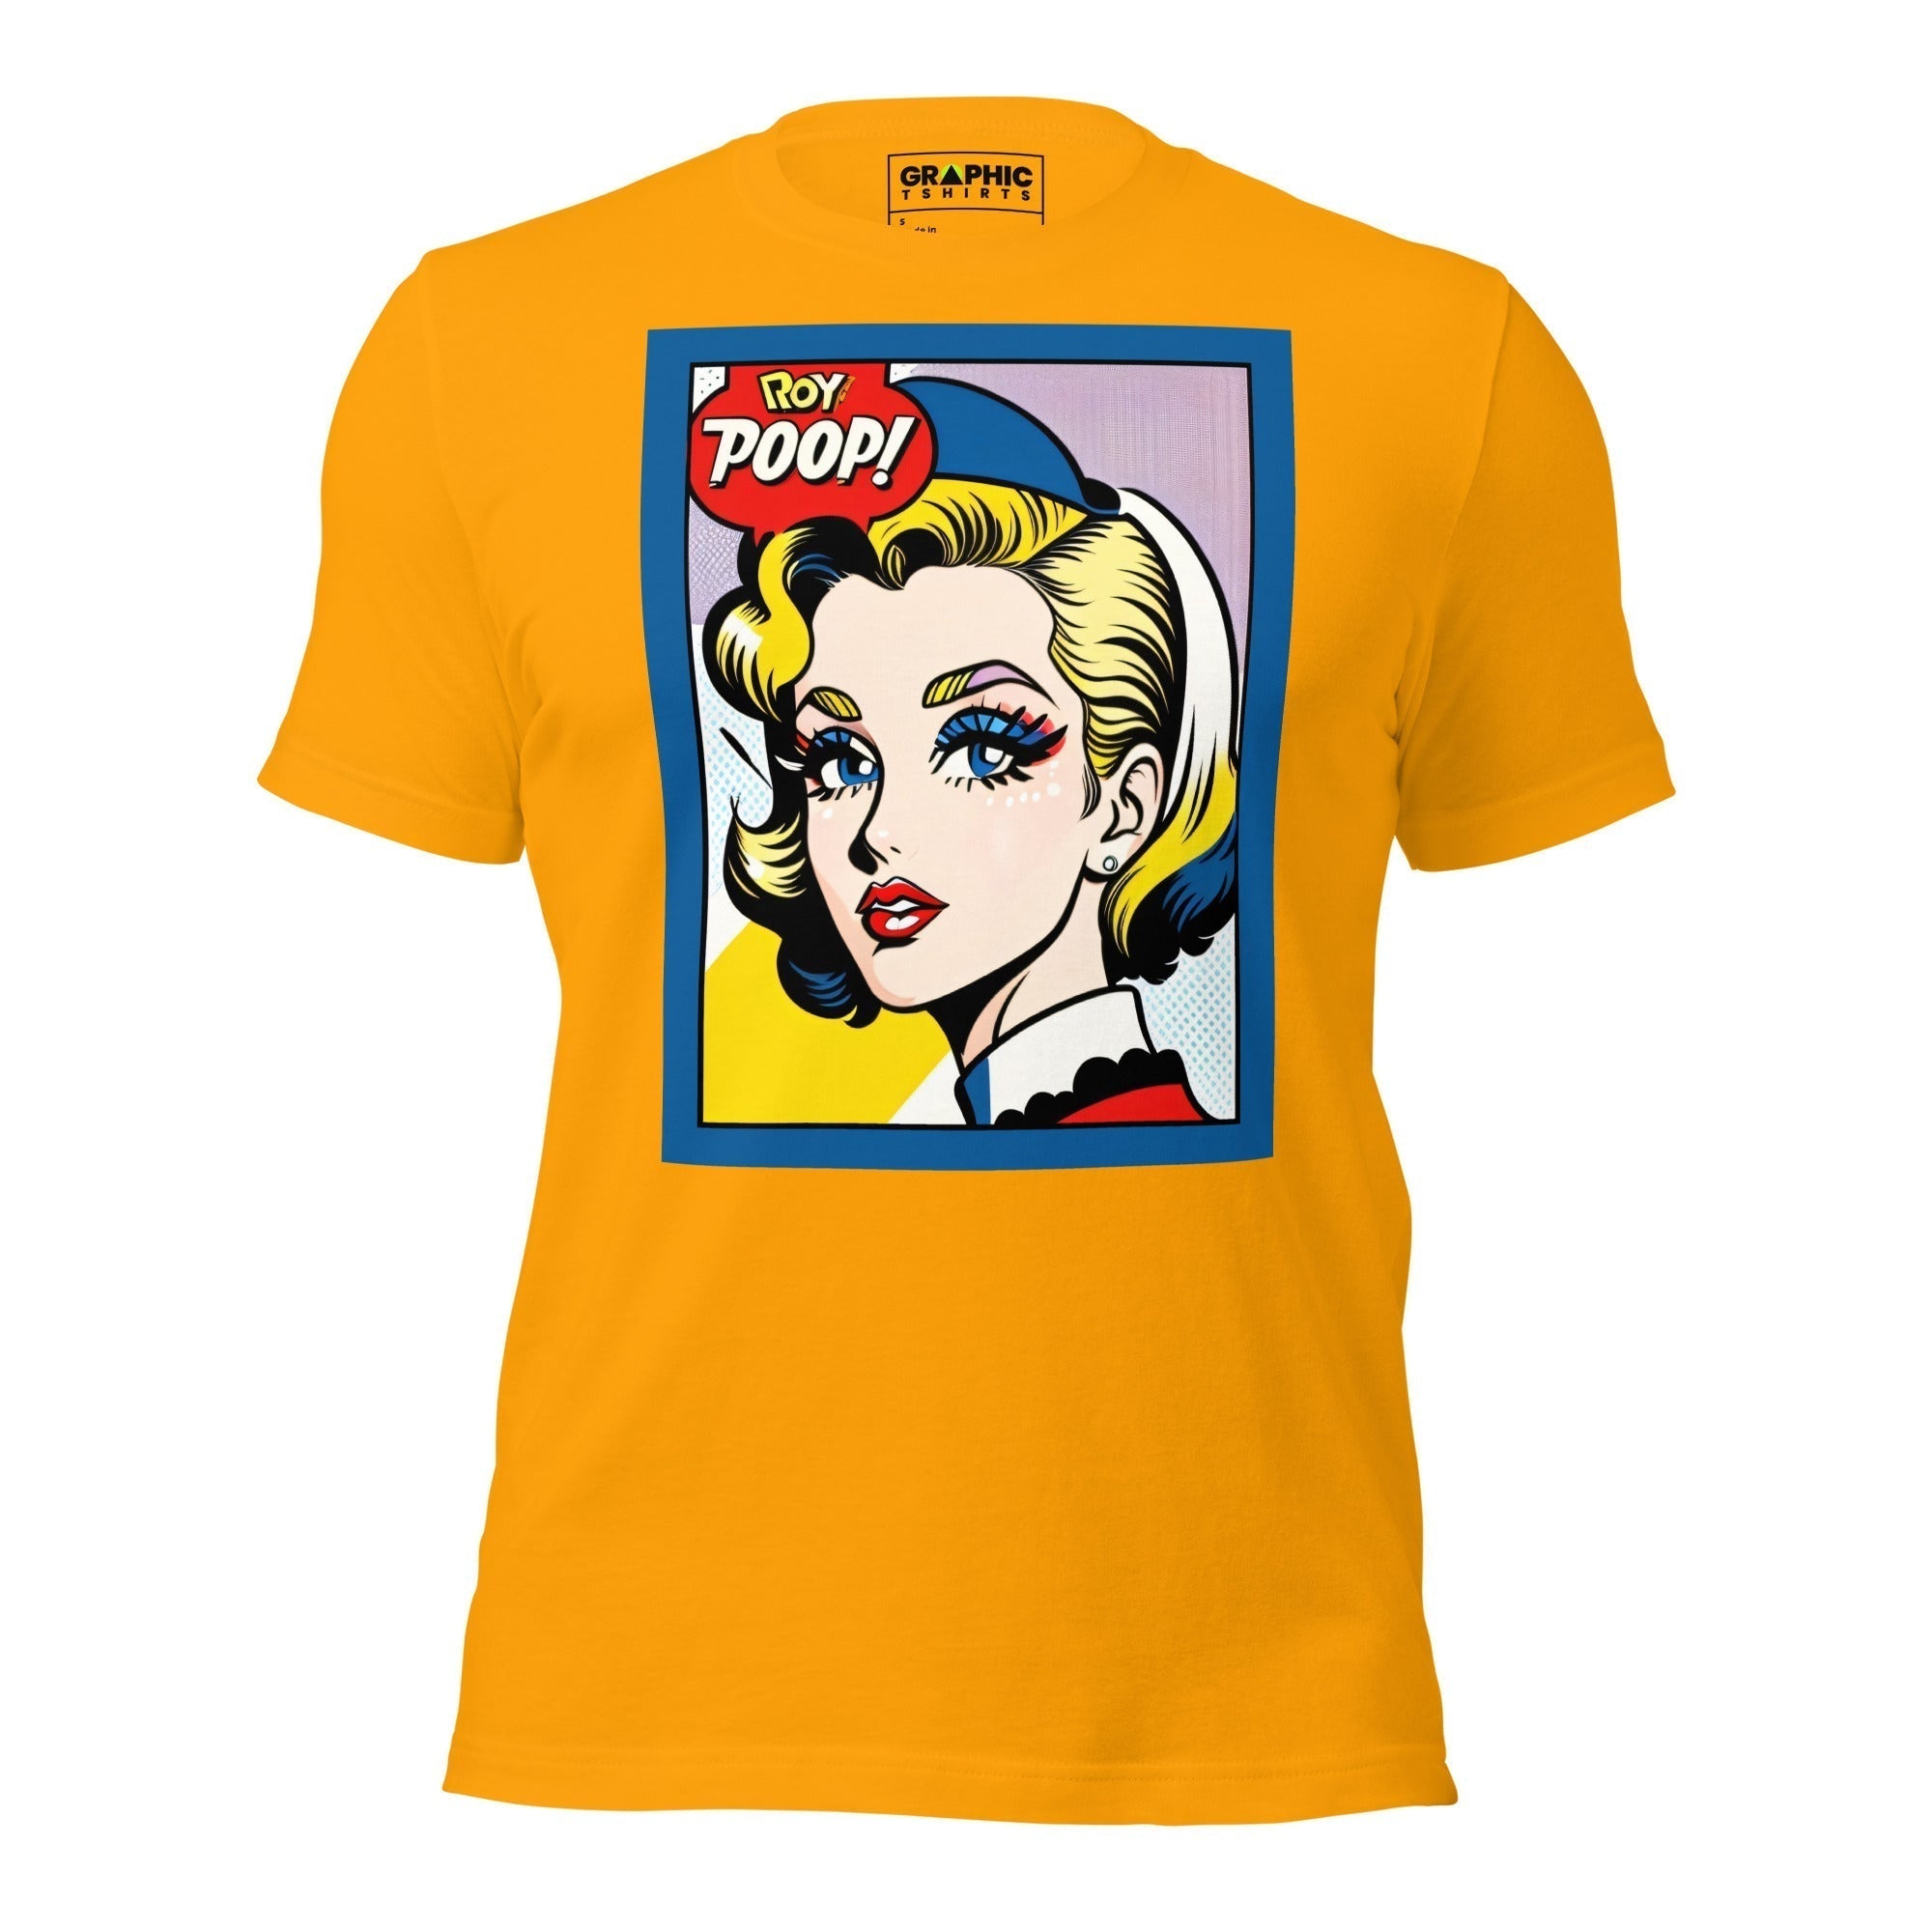 Unisex Crew Neck T-Shirt - Vintage American Comic Series v.32 - GRAPHIC T-SHIRTS